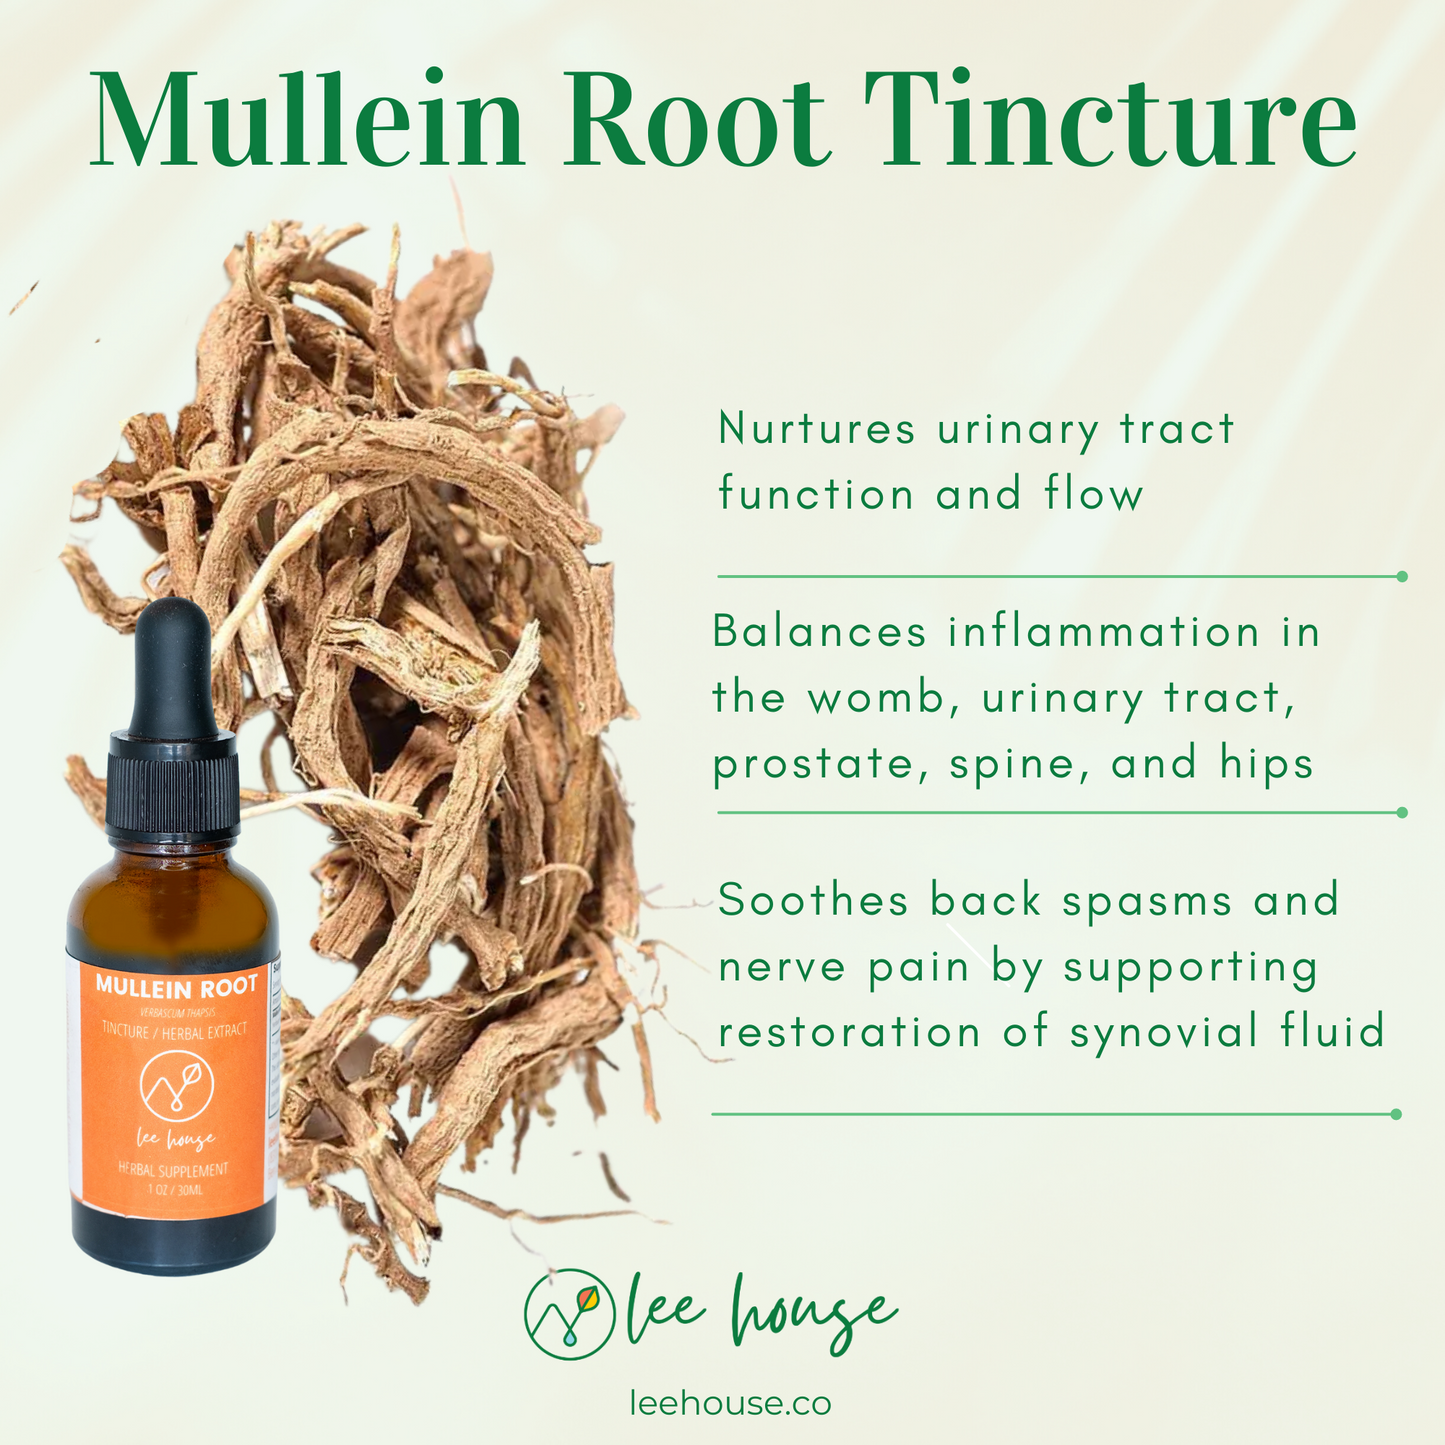 Mullein Root Tincture